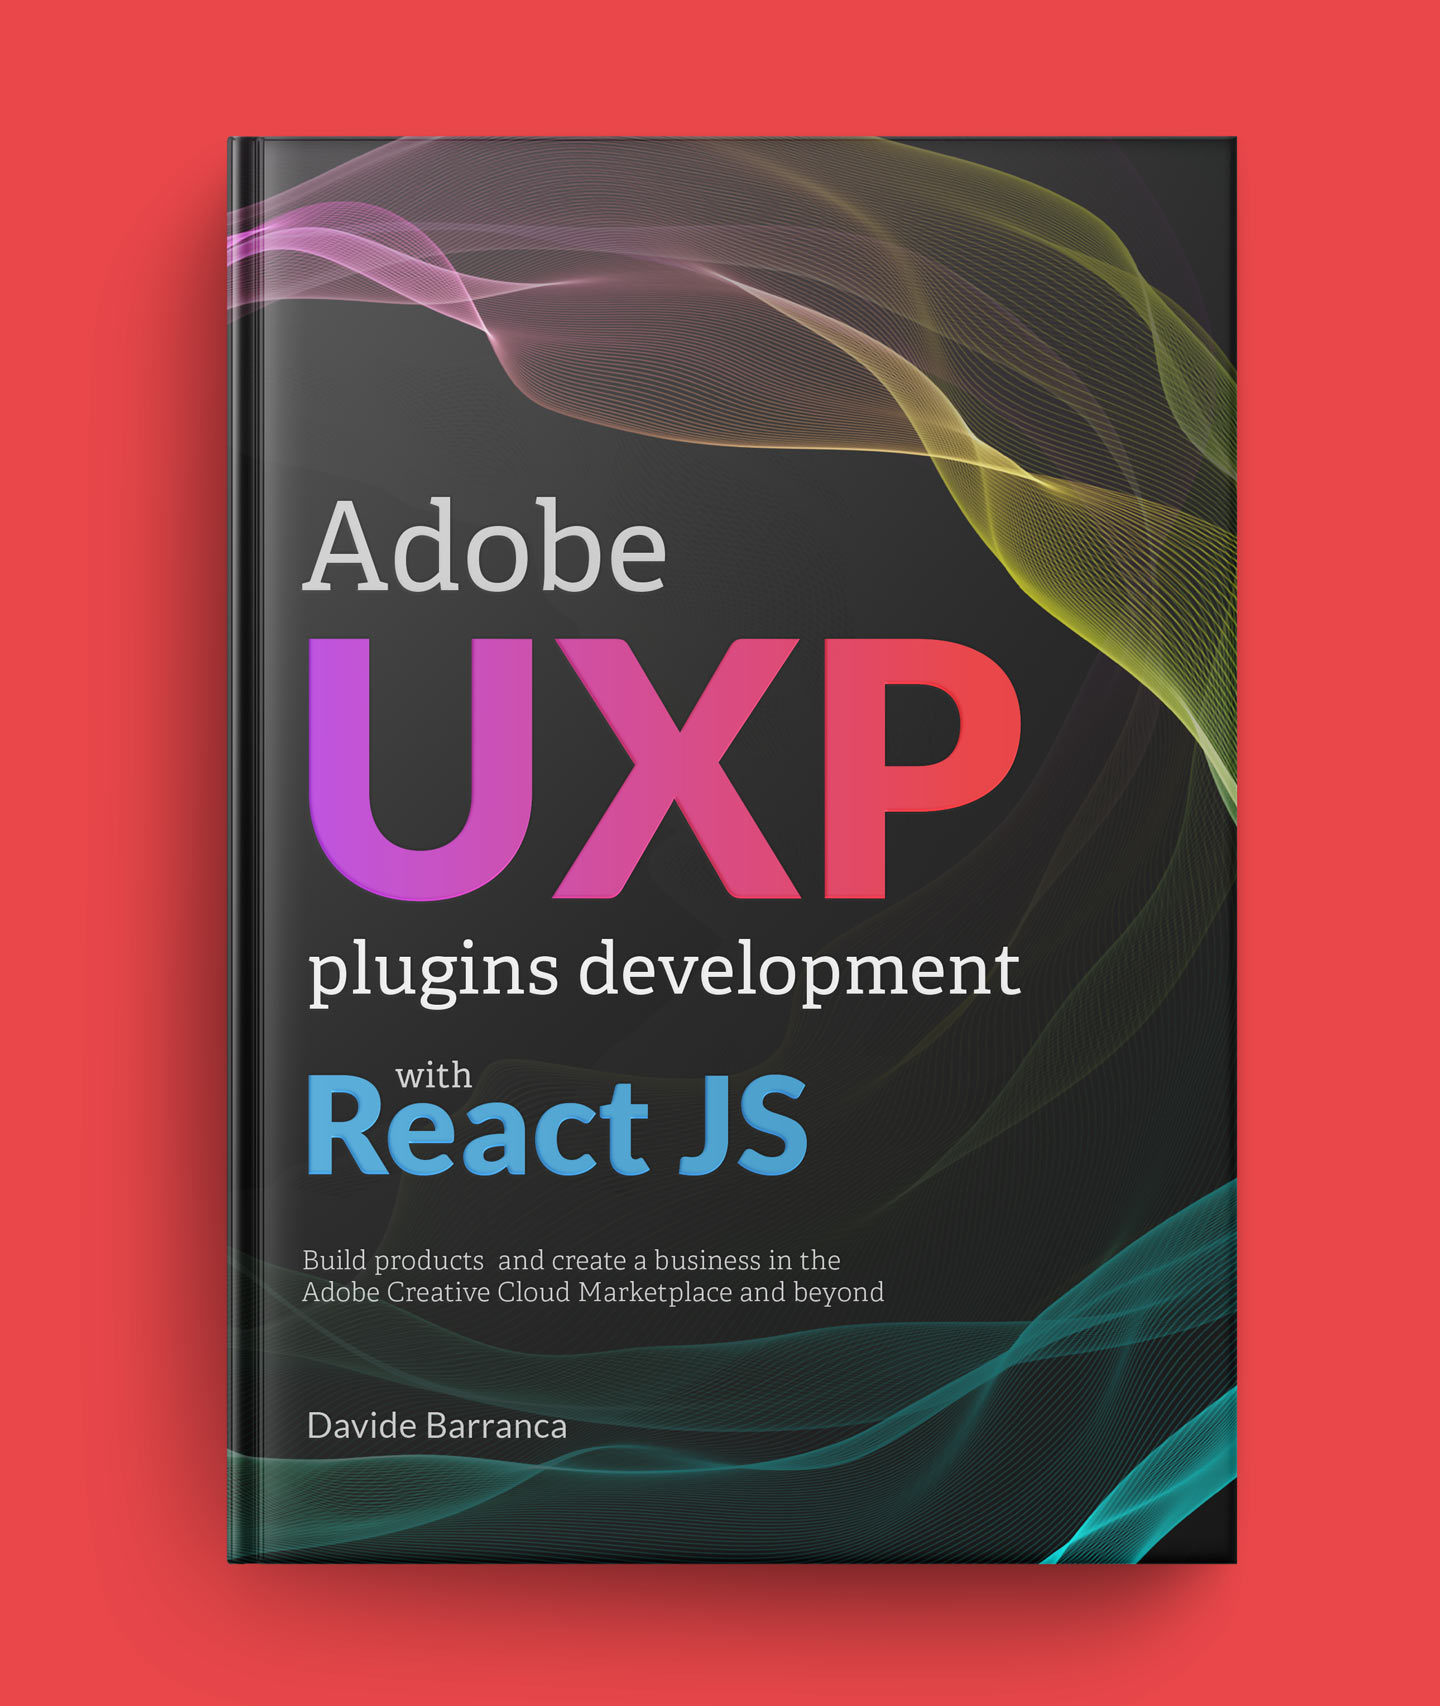 Adobe UXP plugins development with React JS